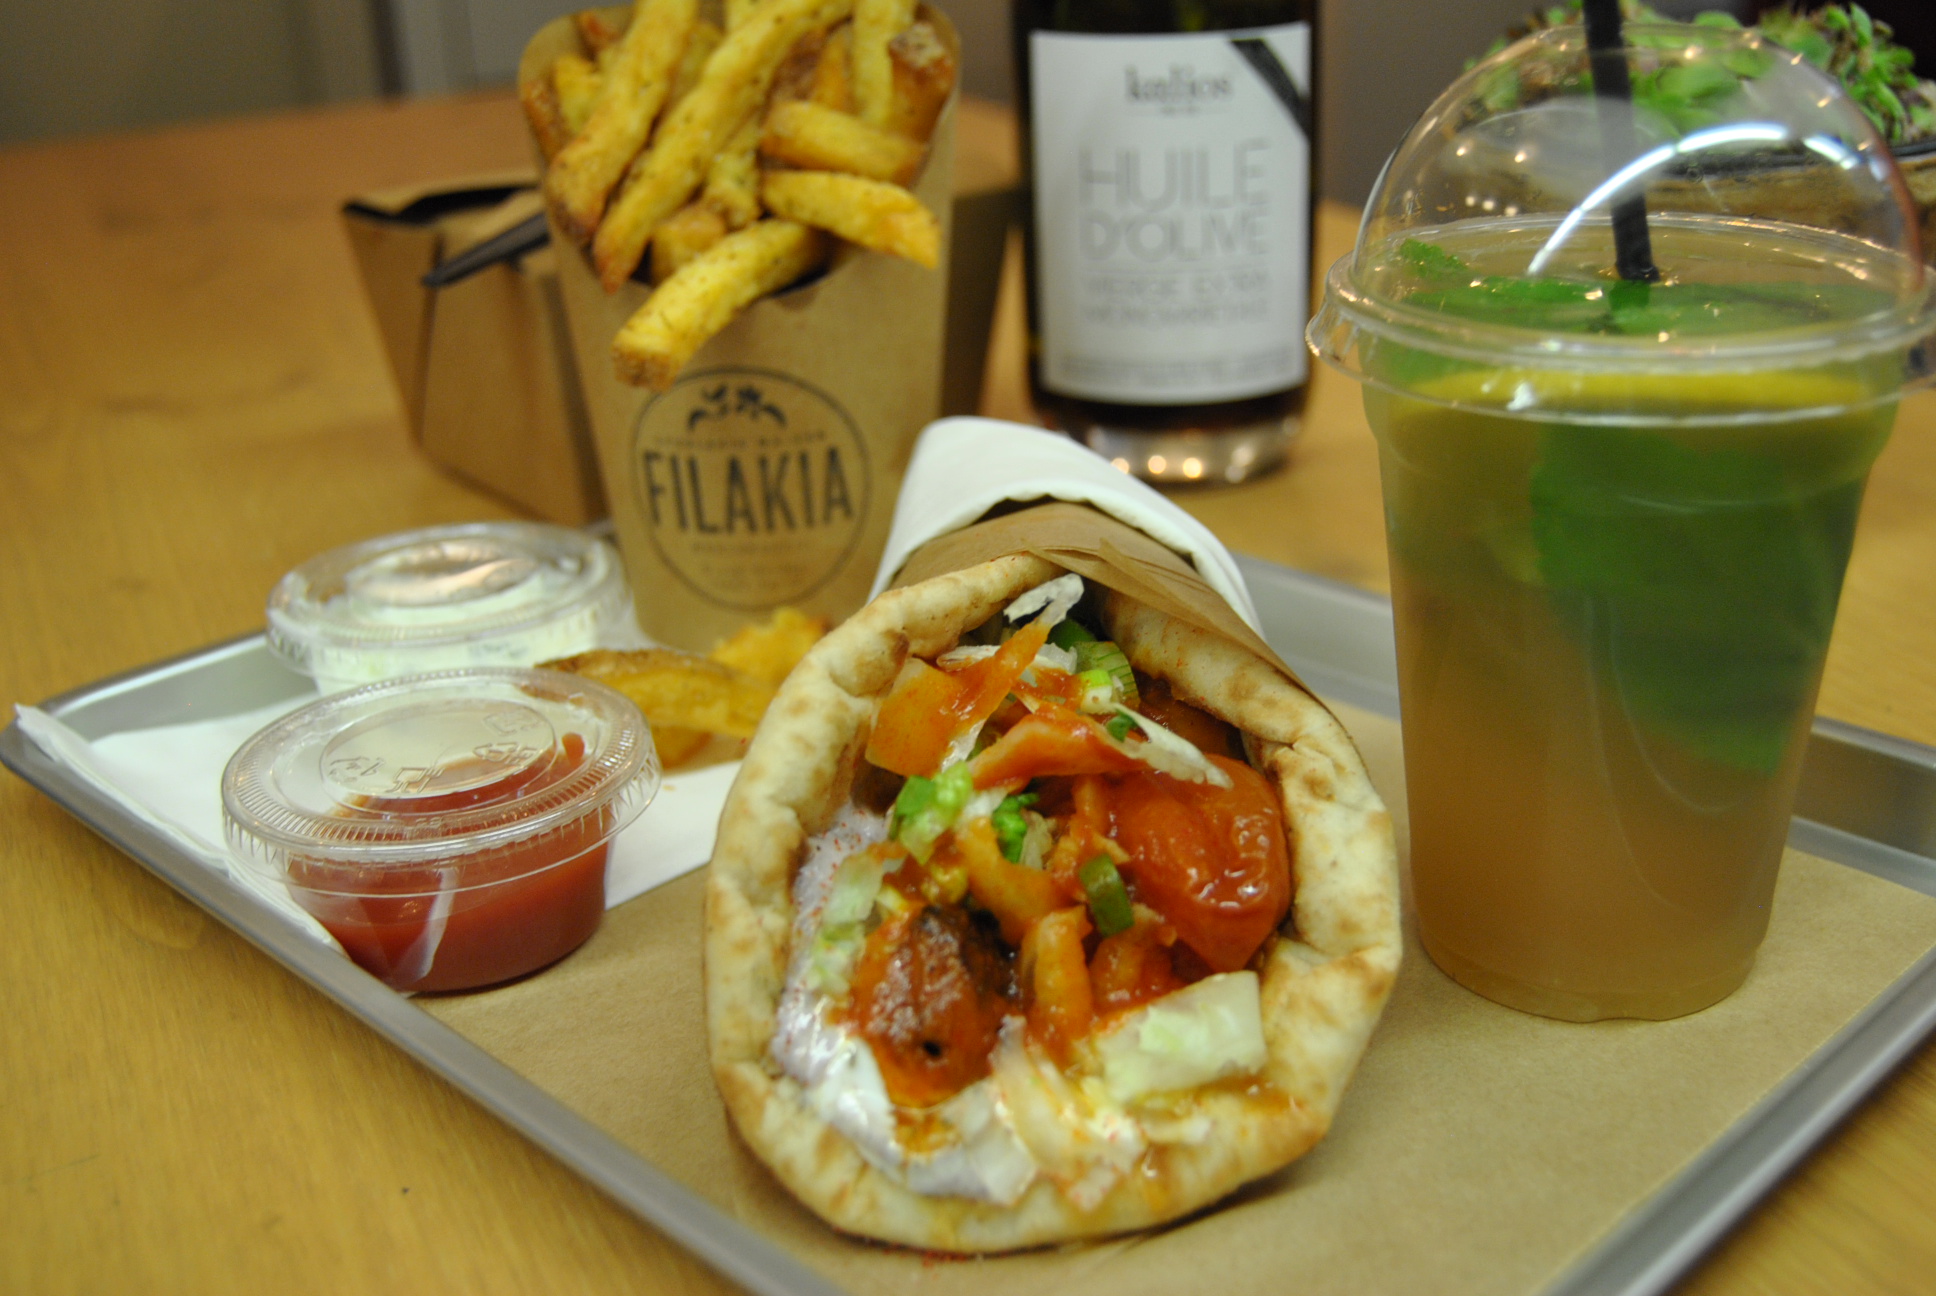 Lunch in Paris: Filakia Greek Restaurant